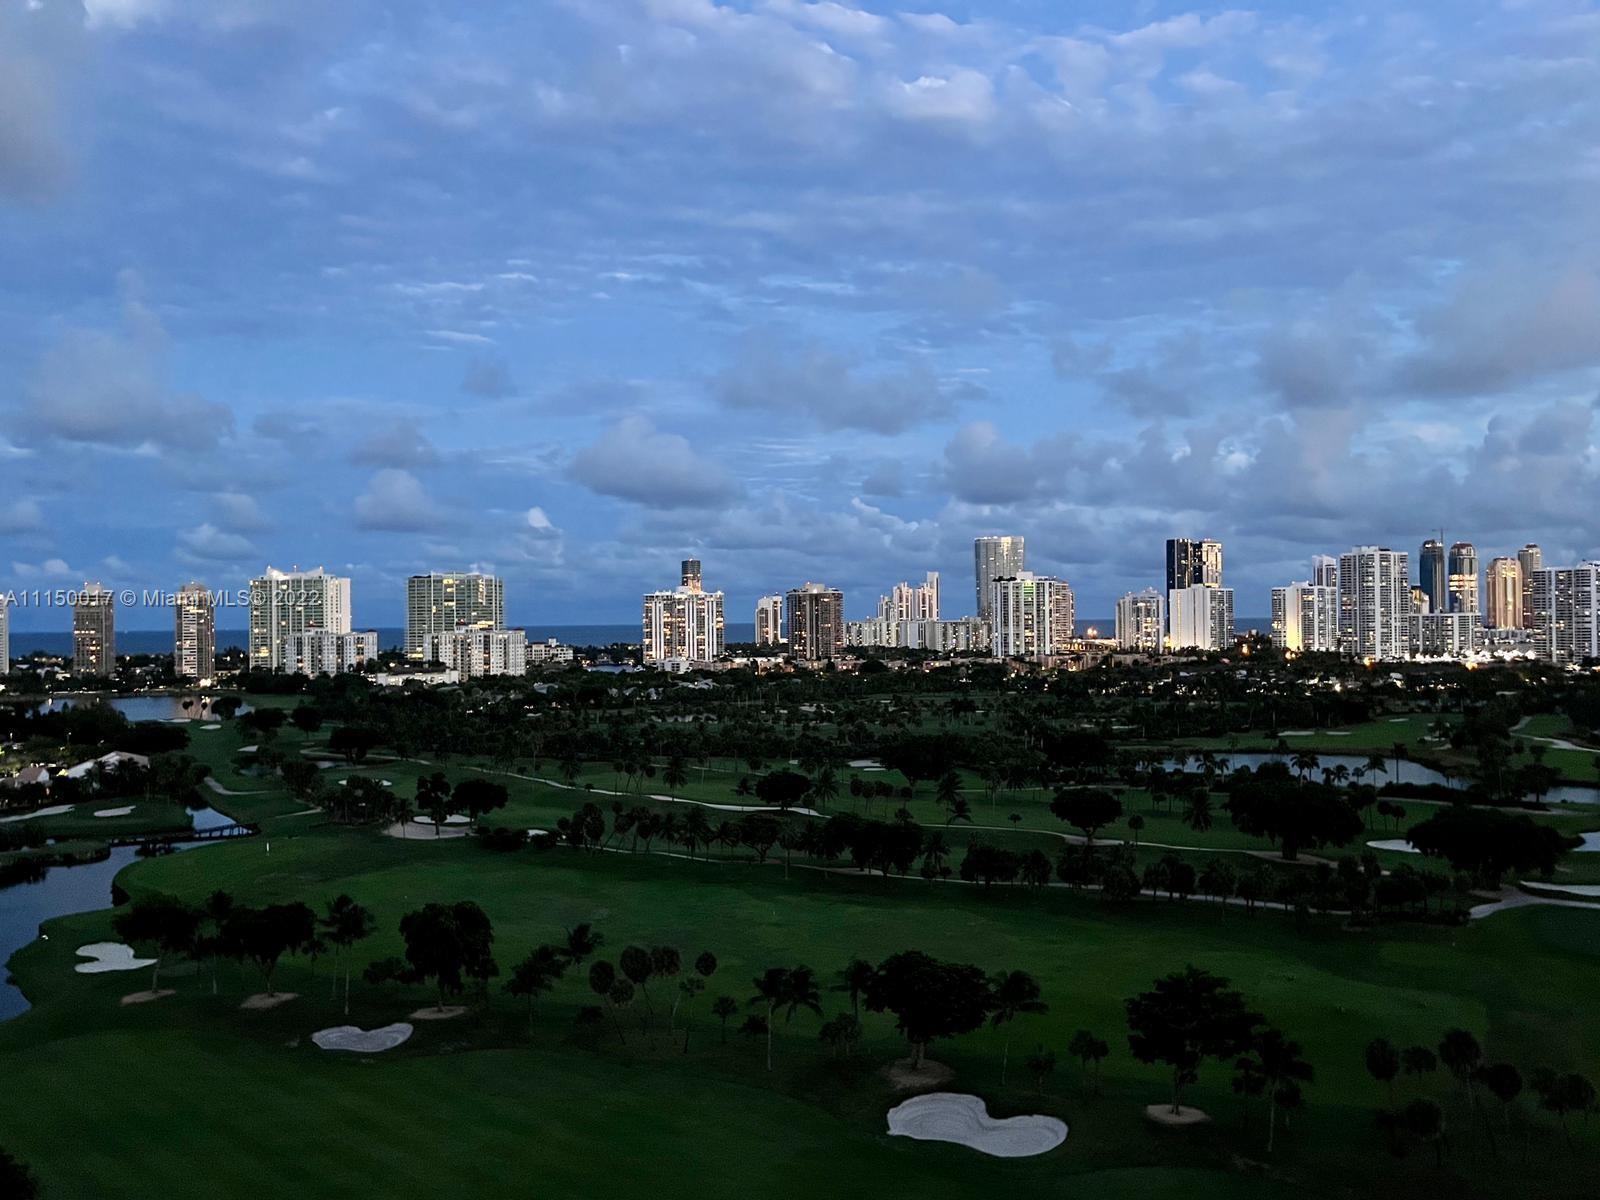 Astonishing and beautiful view on the 21st floor overlooking the award-winning Turnberry Resort Golf